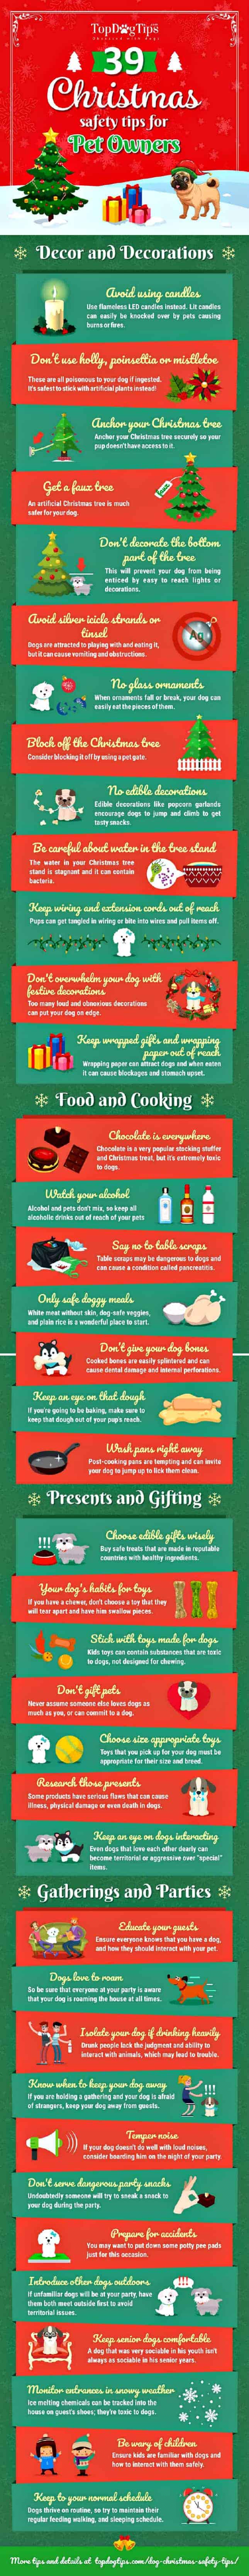 Christmas safety tips